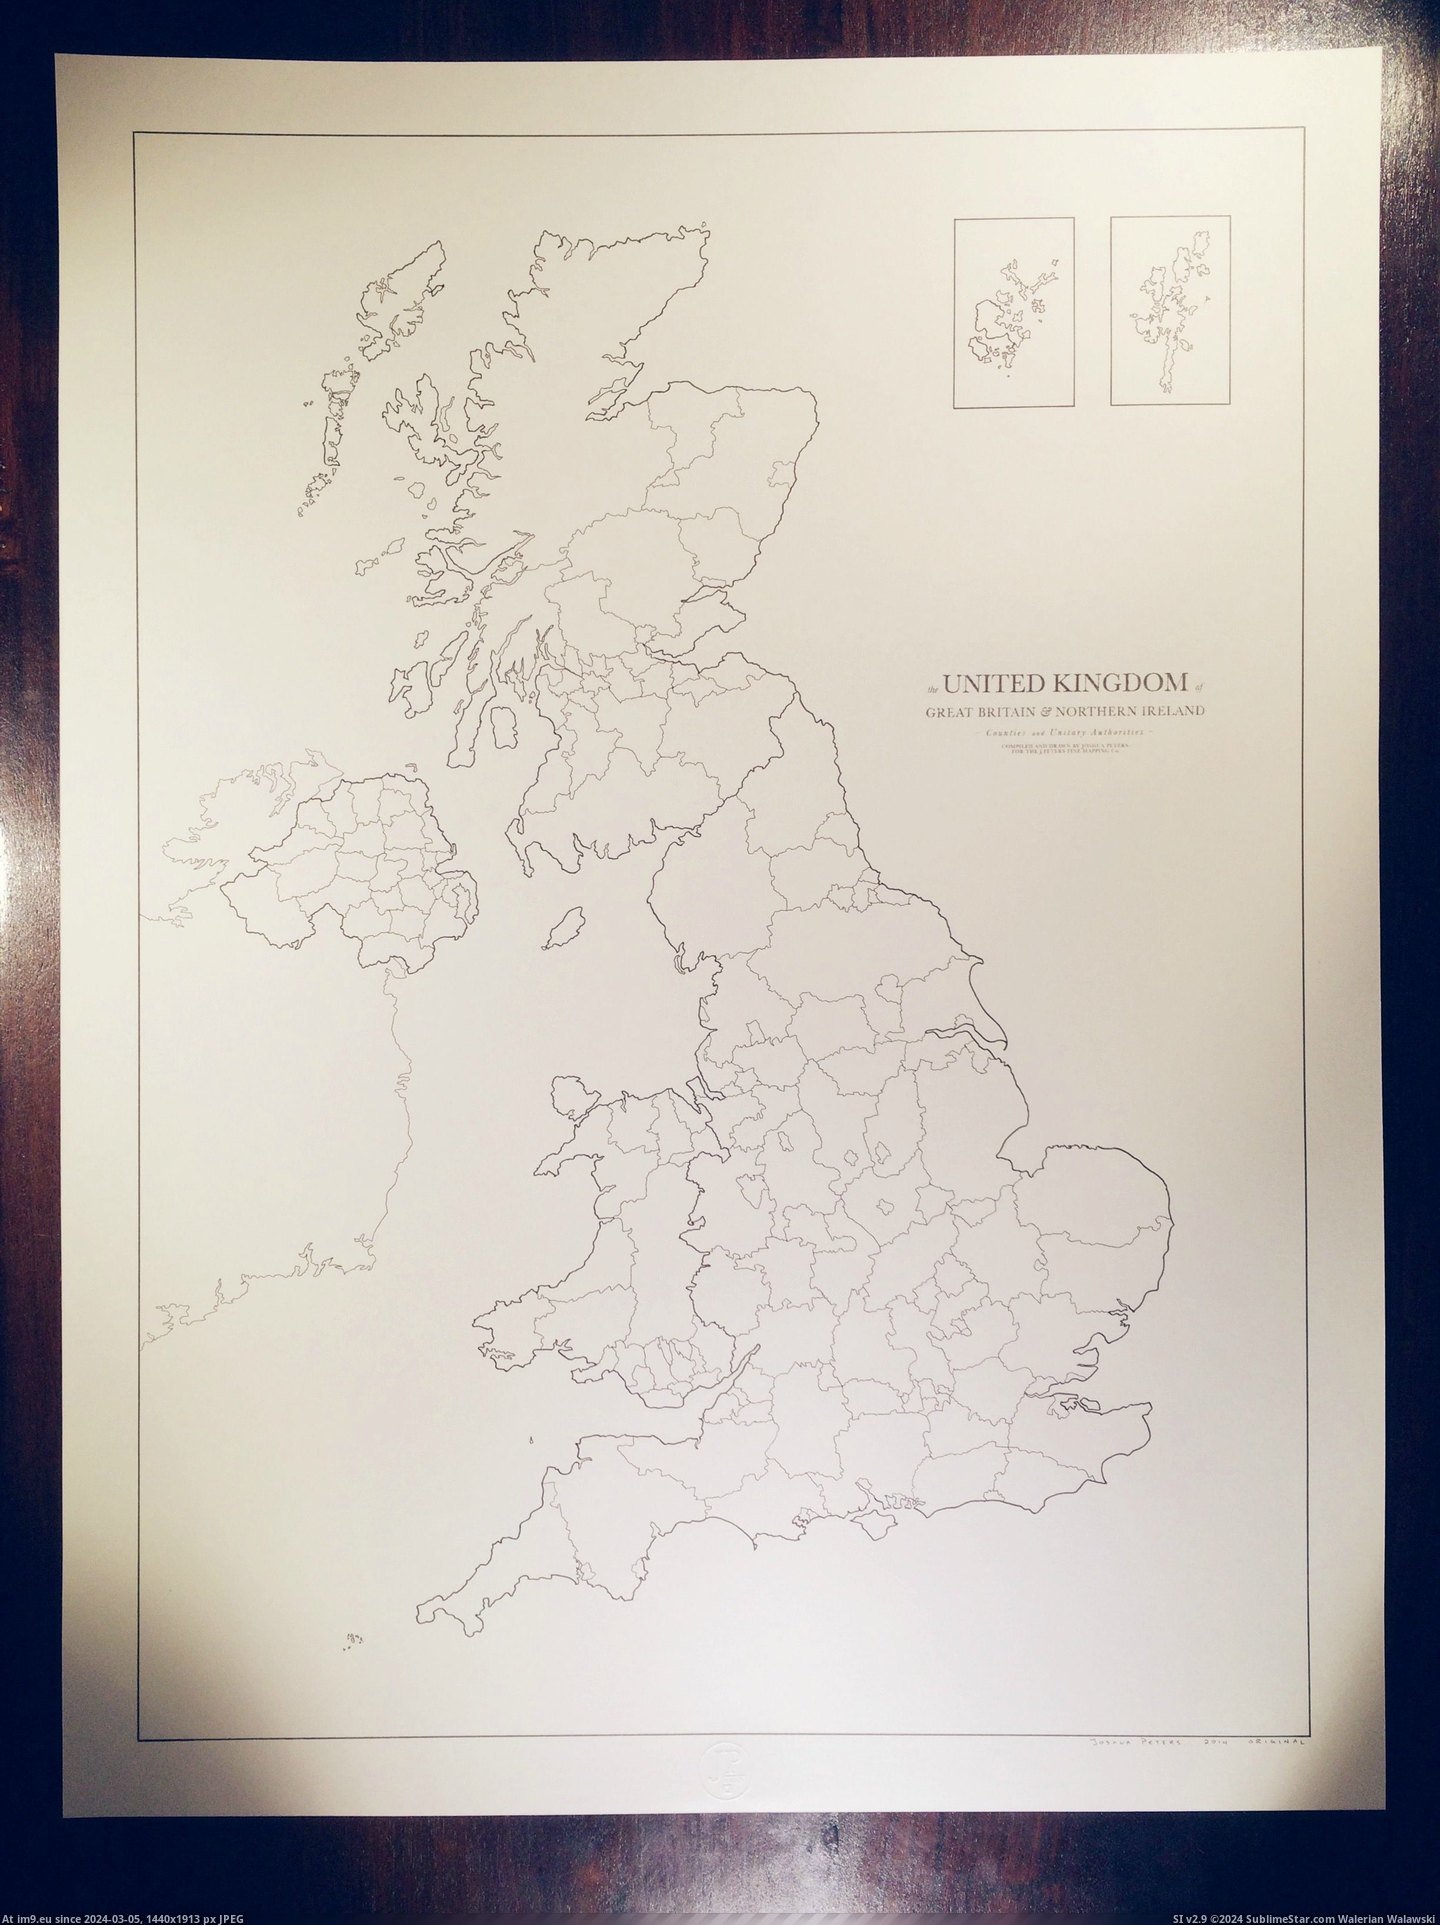 #Great #United #Northern #Britain #Boundaries #Ireland #Kingdom #Counties [Mapporn] The United Kingdom of Great Britain & Northern Ireland: Counties and Unitary Boundaries [2448 × 3264] Pic. (Изображение из альбом My r/MAPS favs))